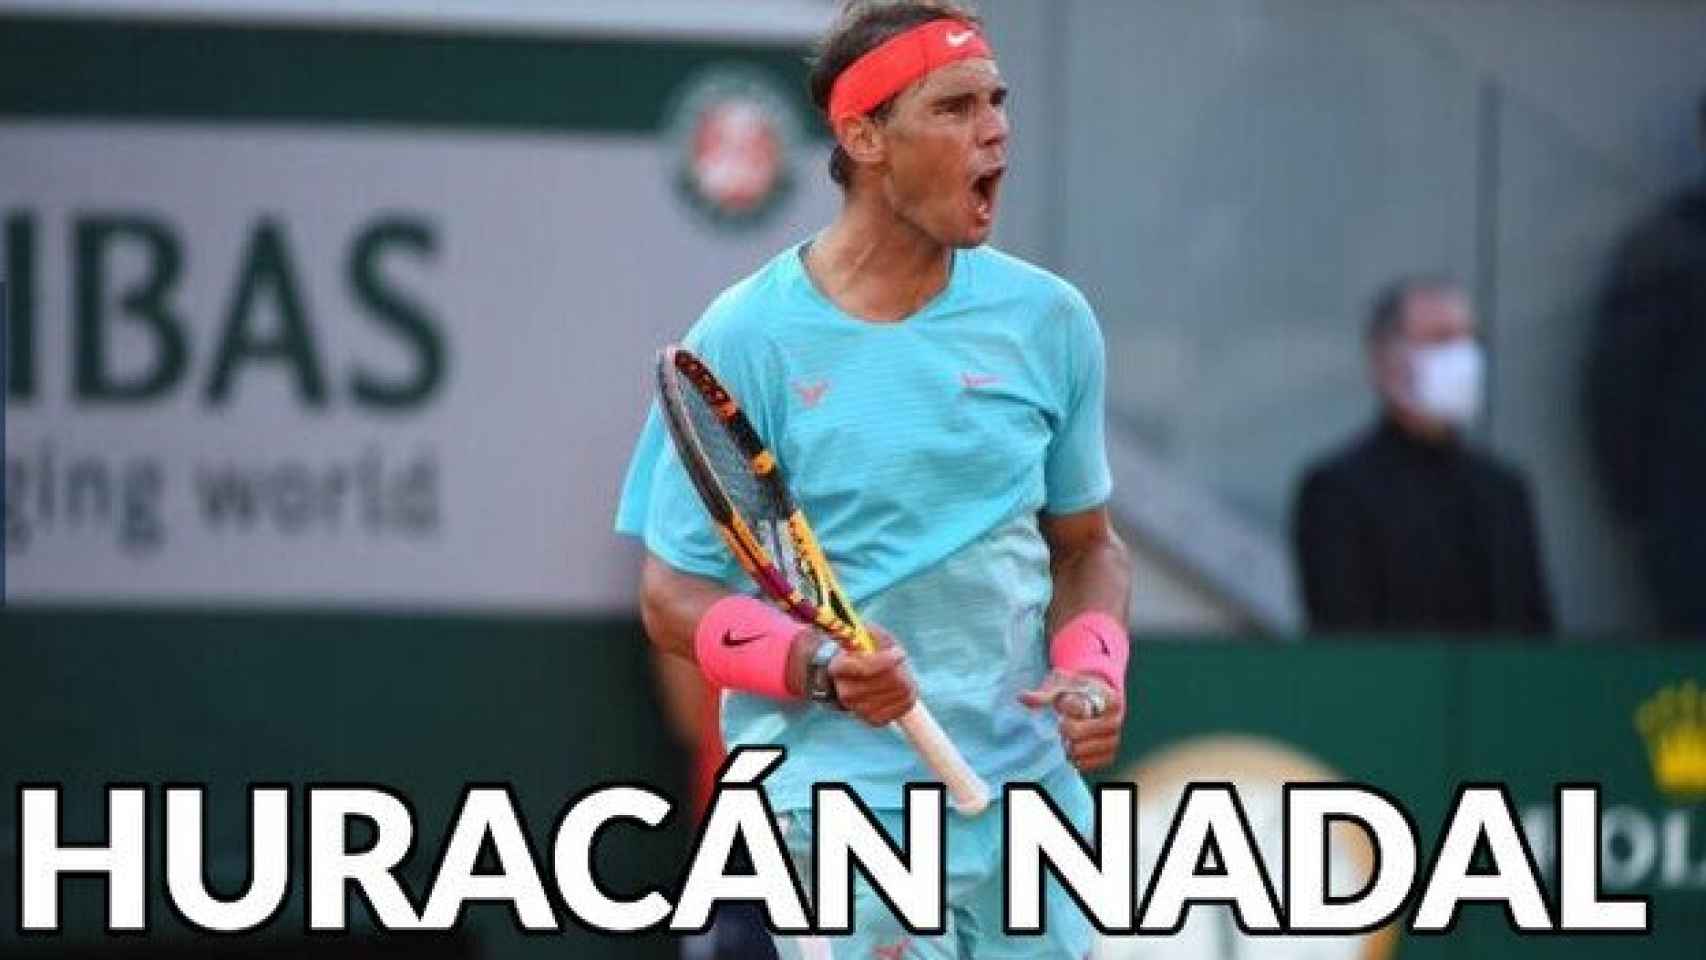 Meme de la final de Roland Garros entre Novak Djokovic y Rafa Nadal